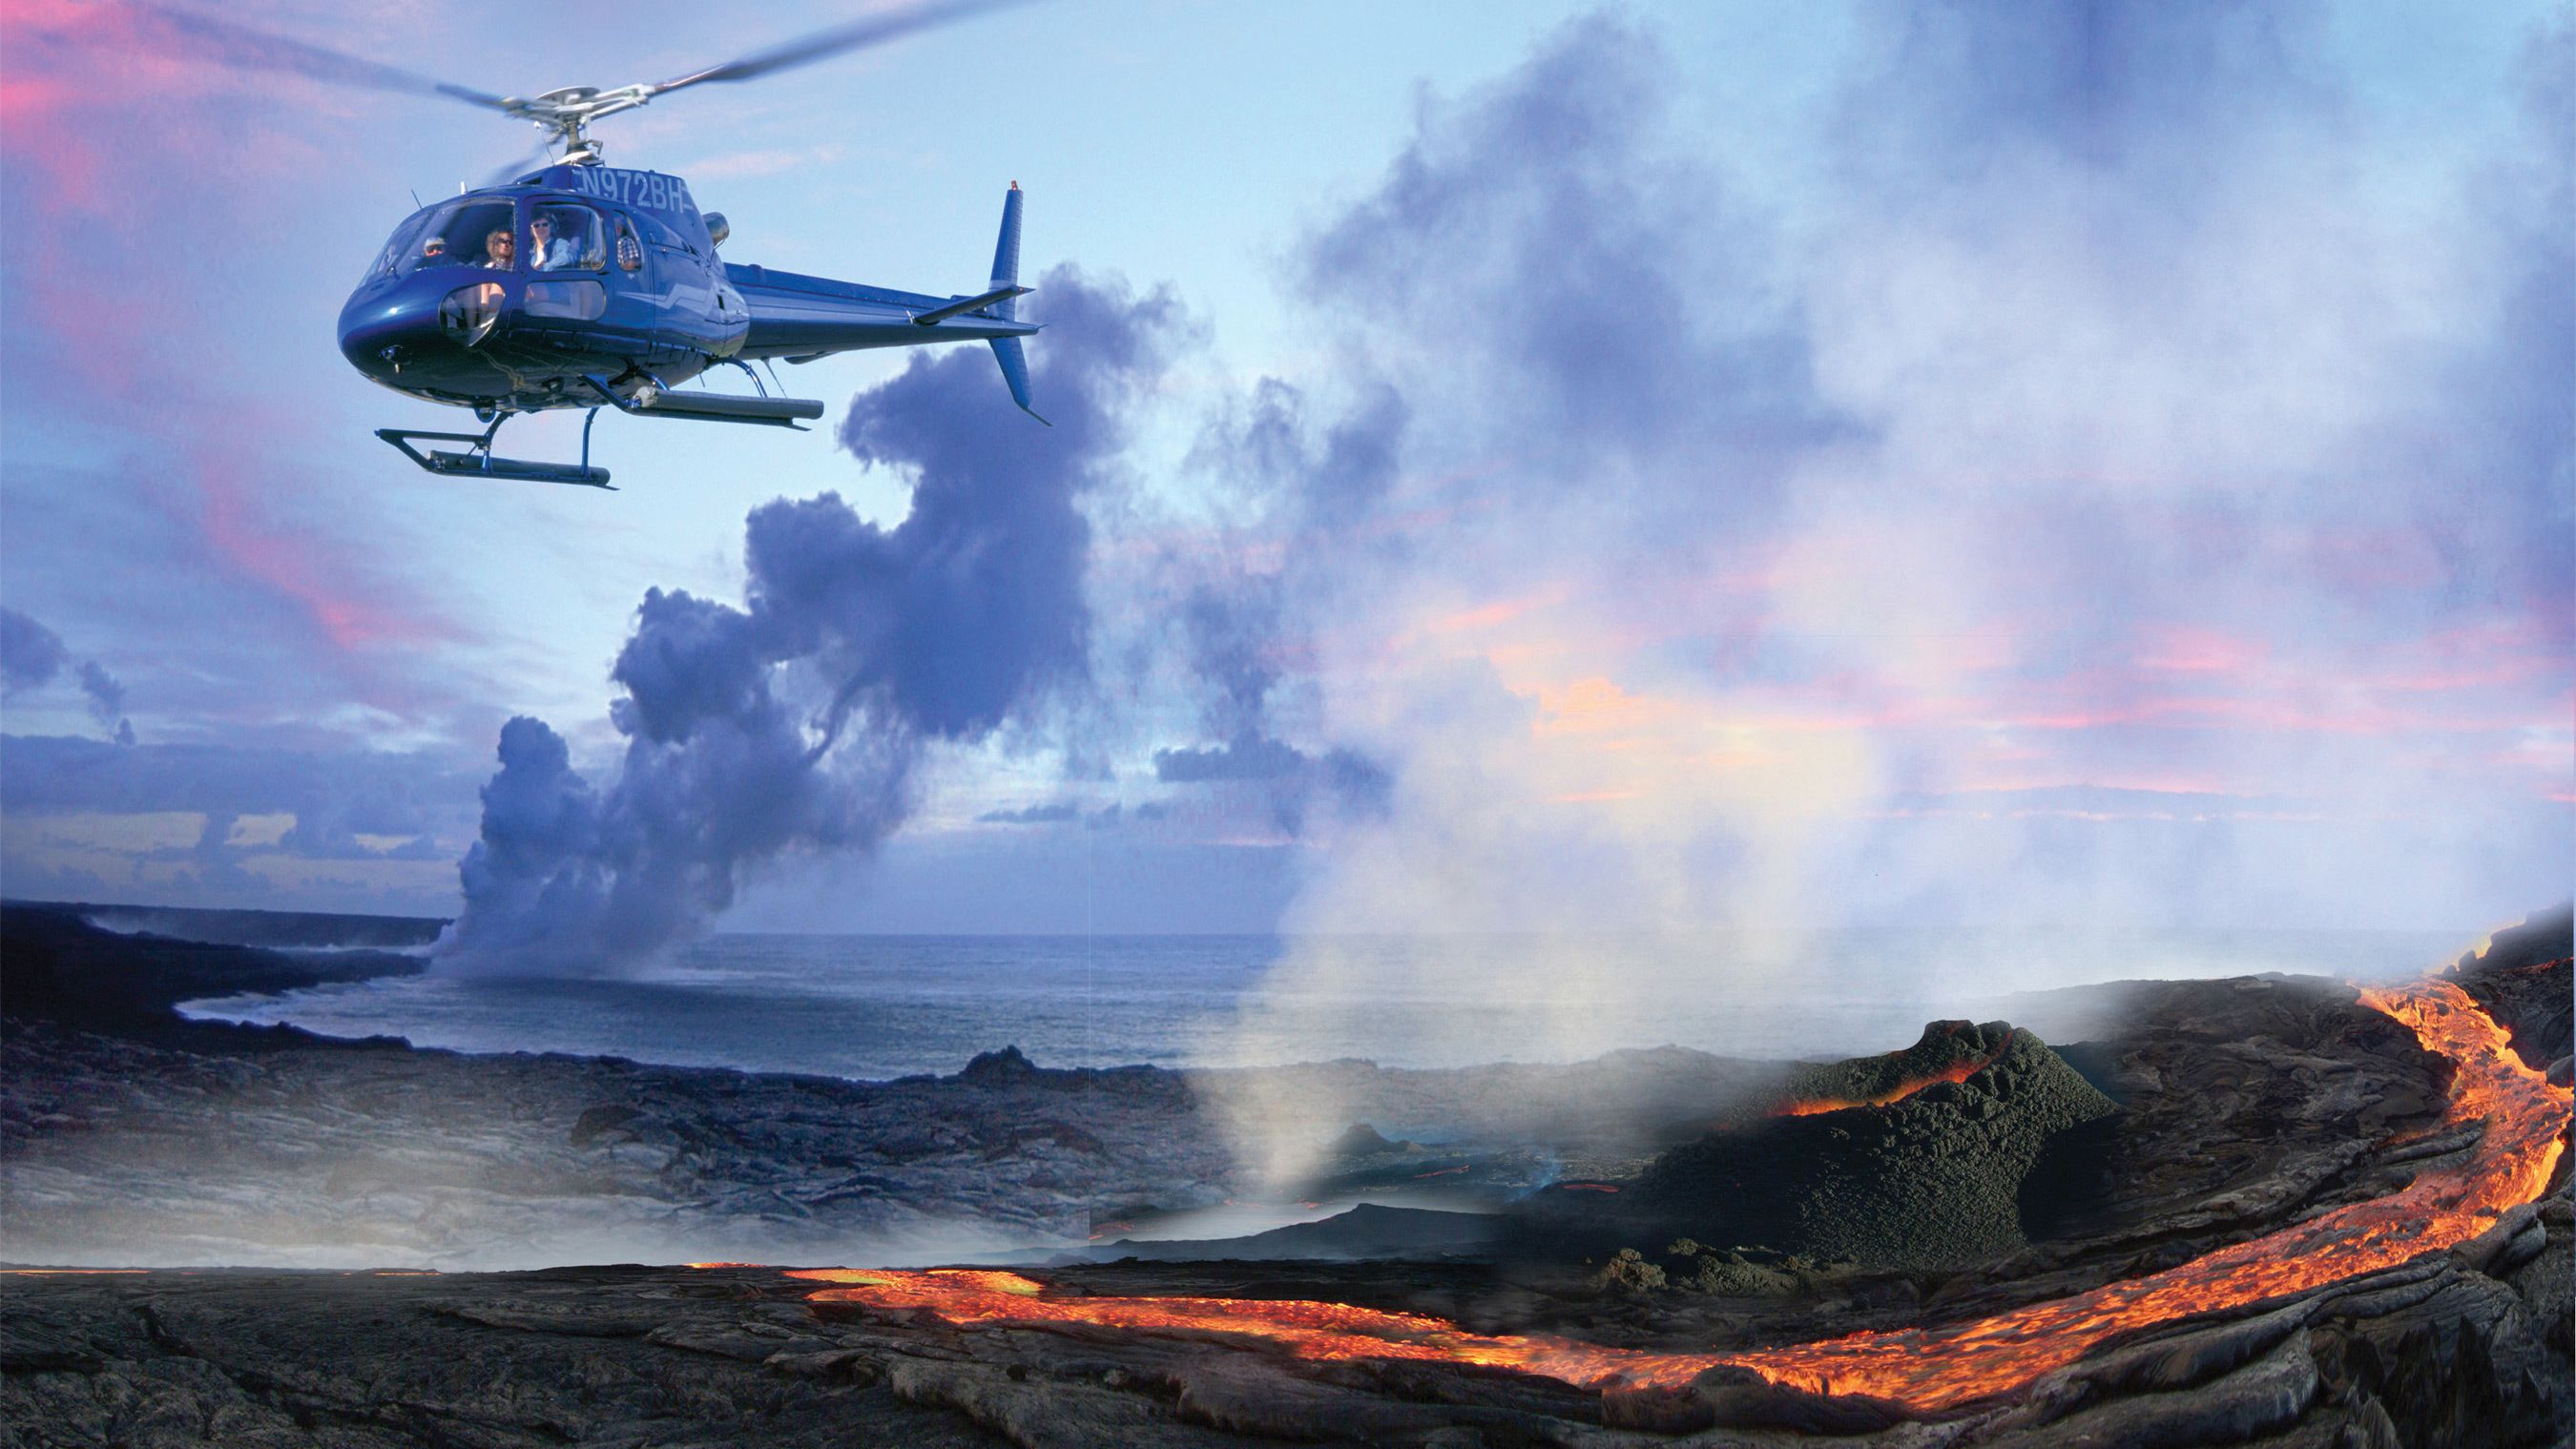 big island hawaii volcano helicopter tours